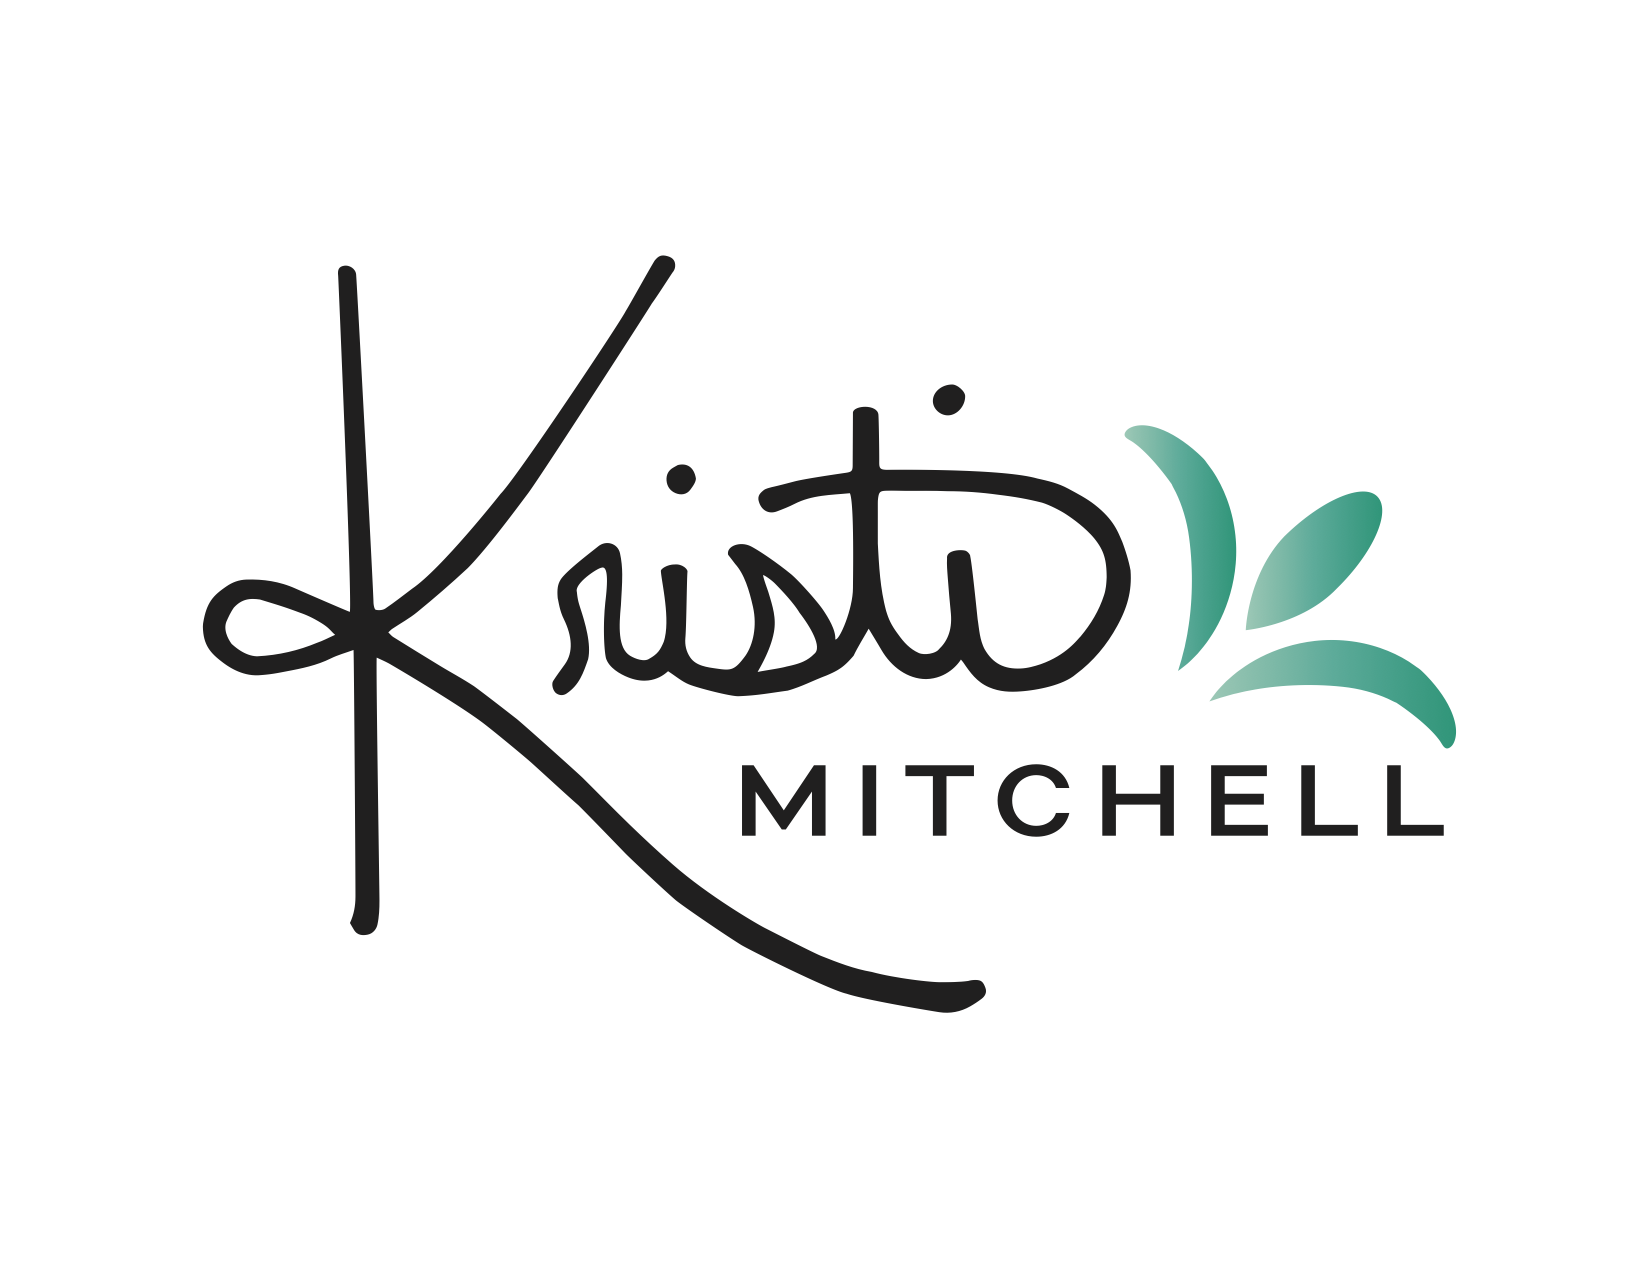 Kristi_Mitchell_Logo